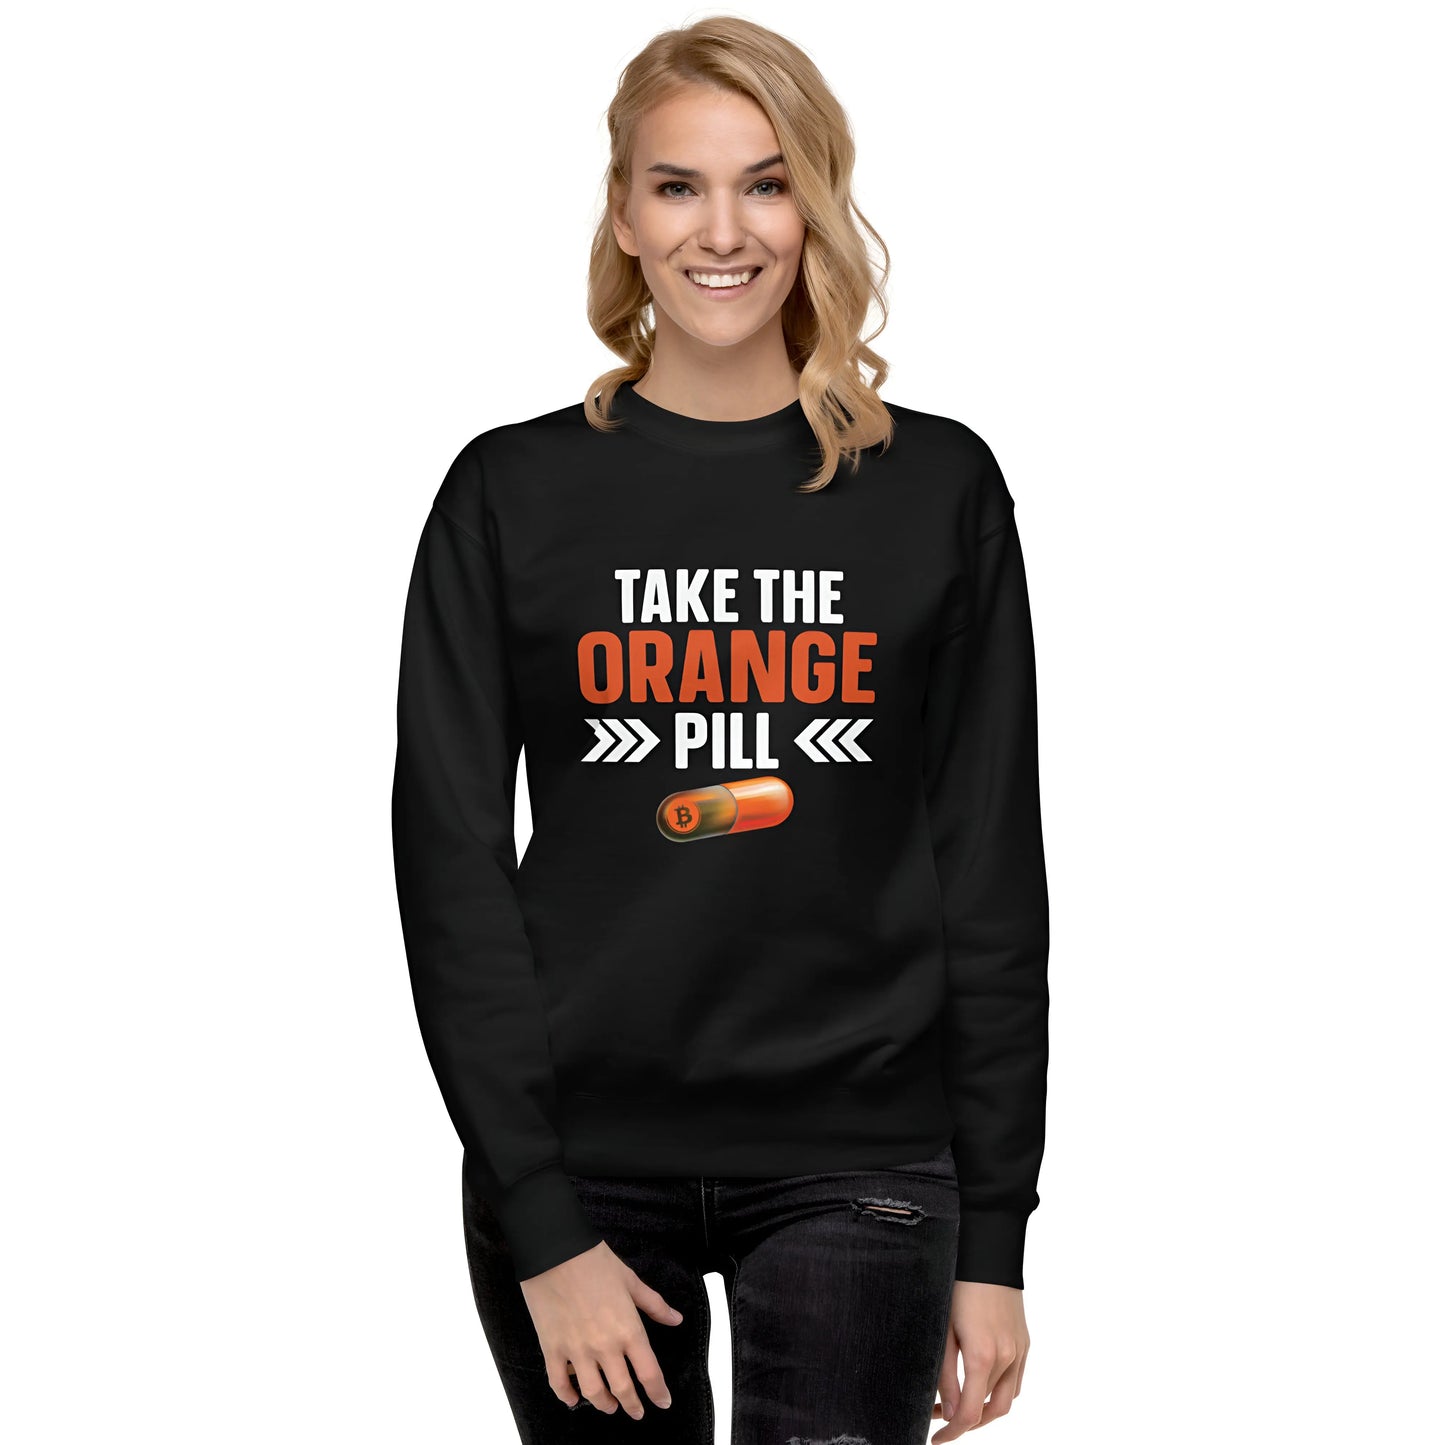 Take the Orange Pill - Premium Unisex Bitcoin Sweatshirt Black Color